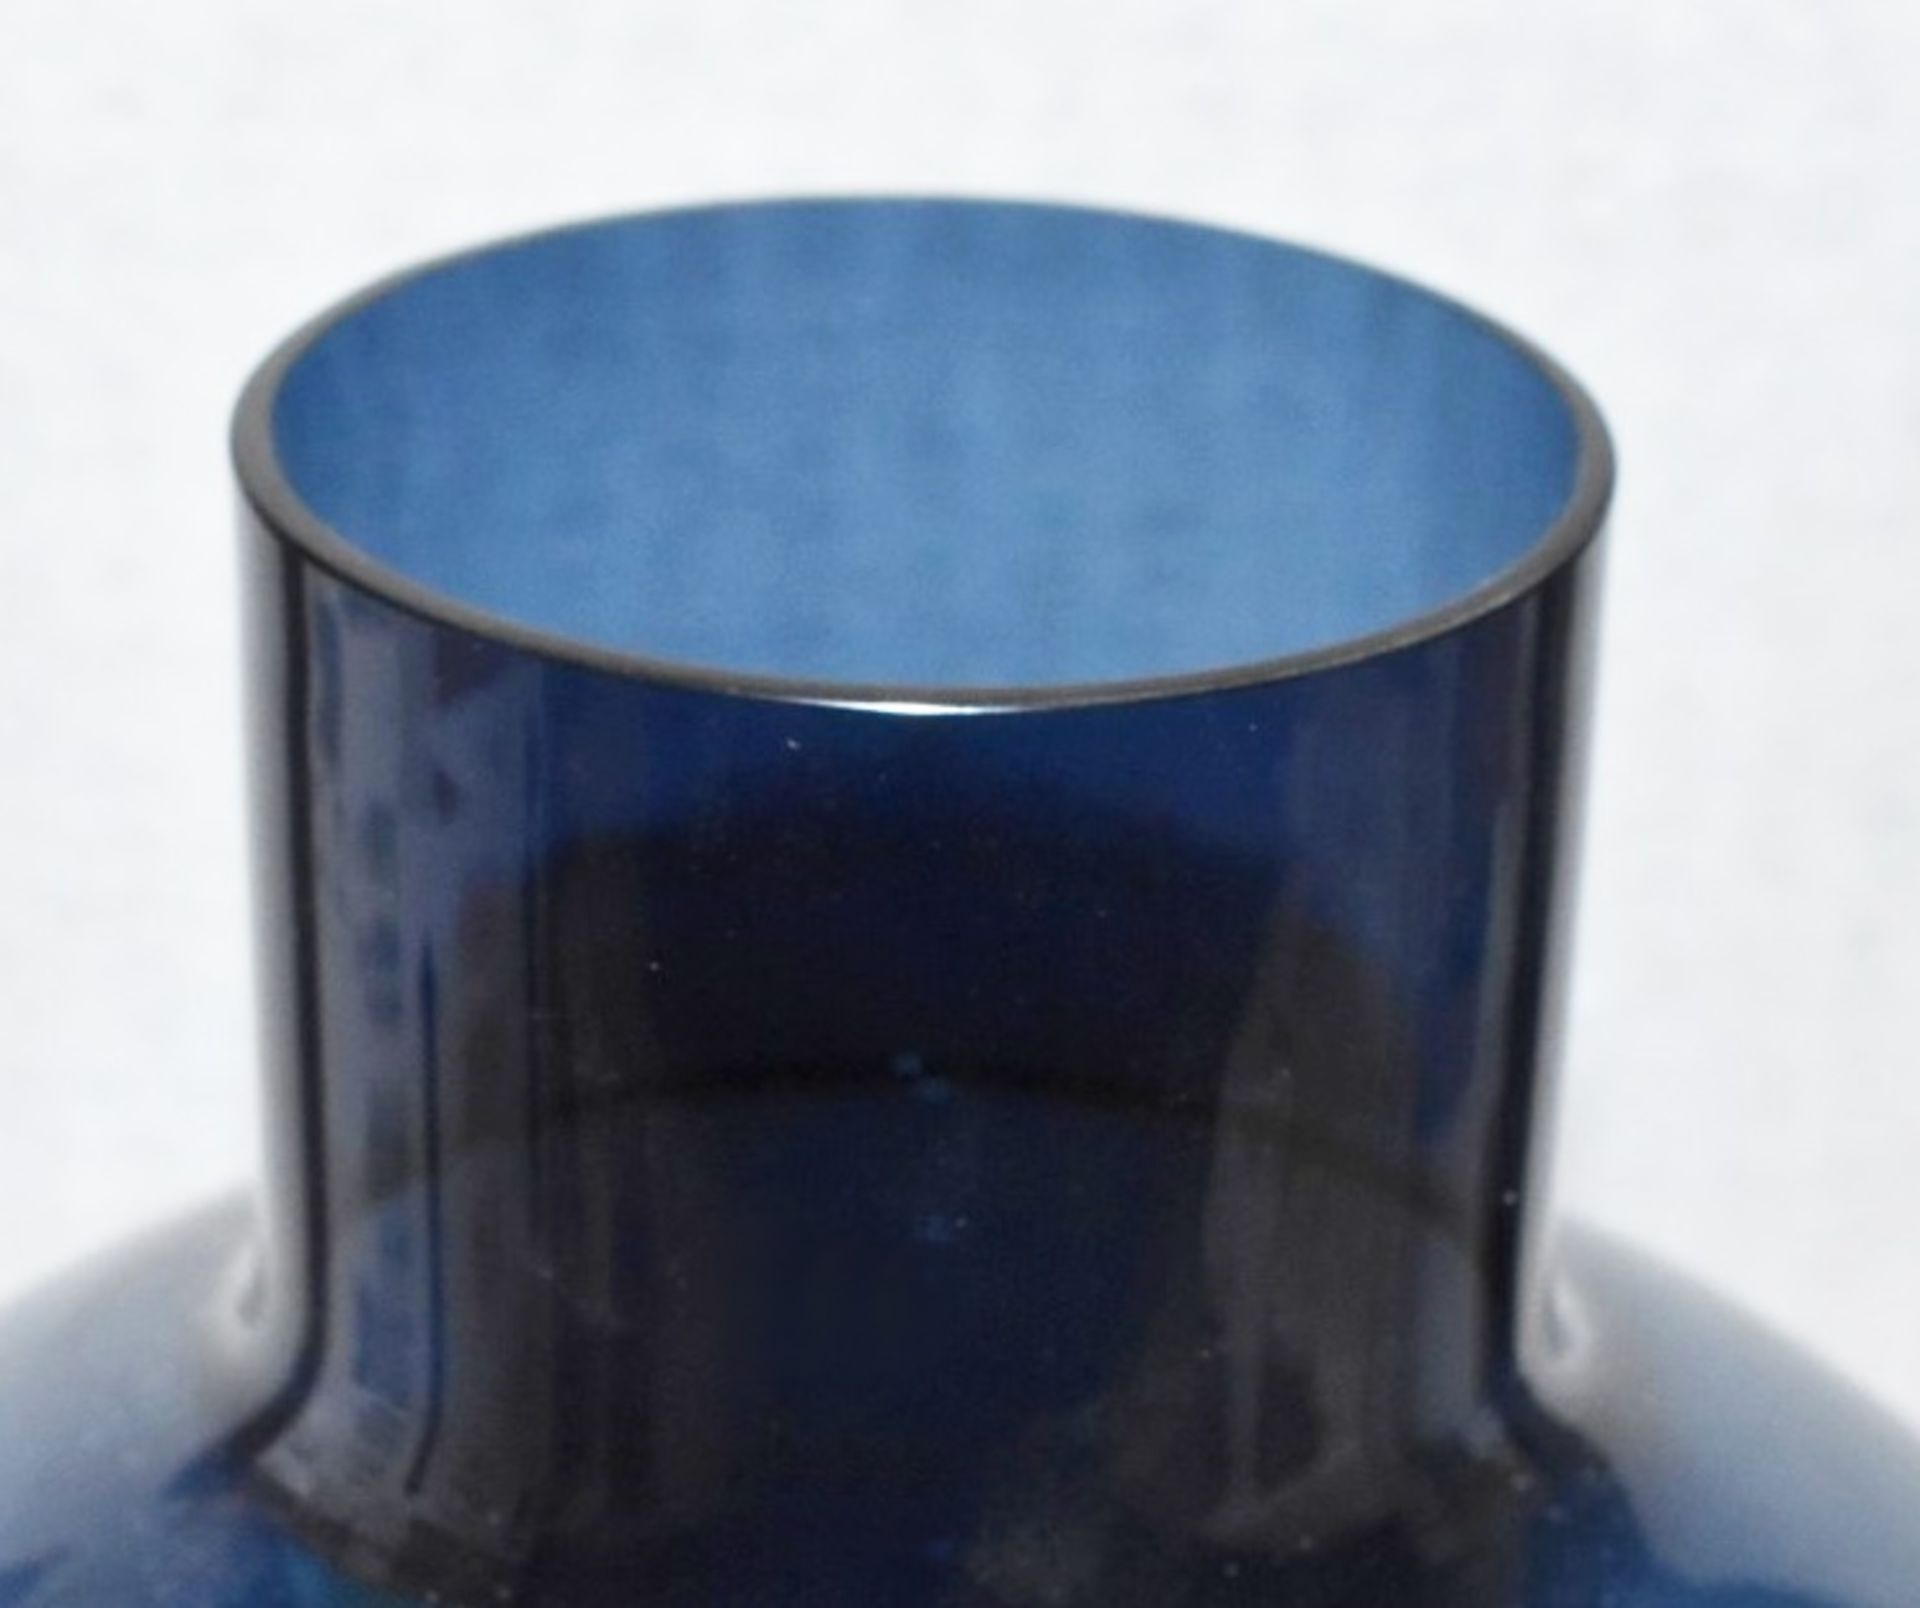 1 x POLTRONA FRAU 'Pallo Pot' High Quality Blown Glass Vase in Midnight Blue - RRP £1,080 *Signed* - Bild 3 aus 7